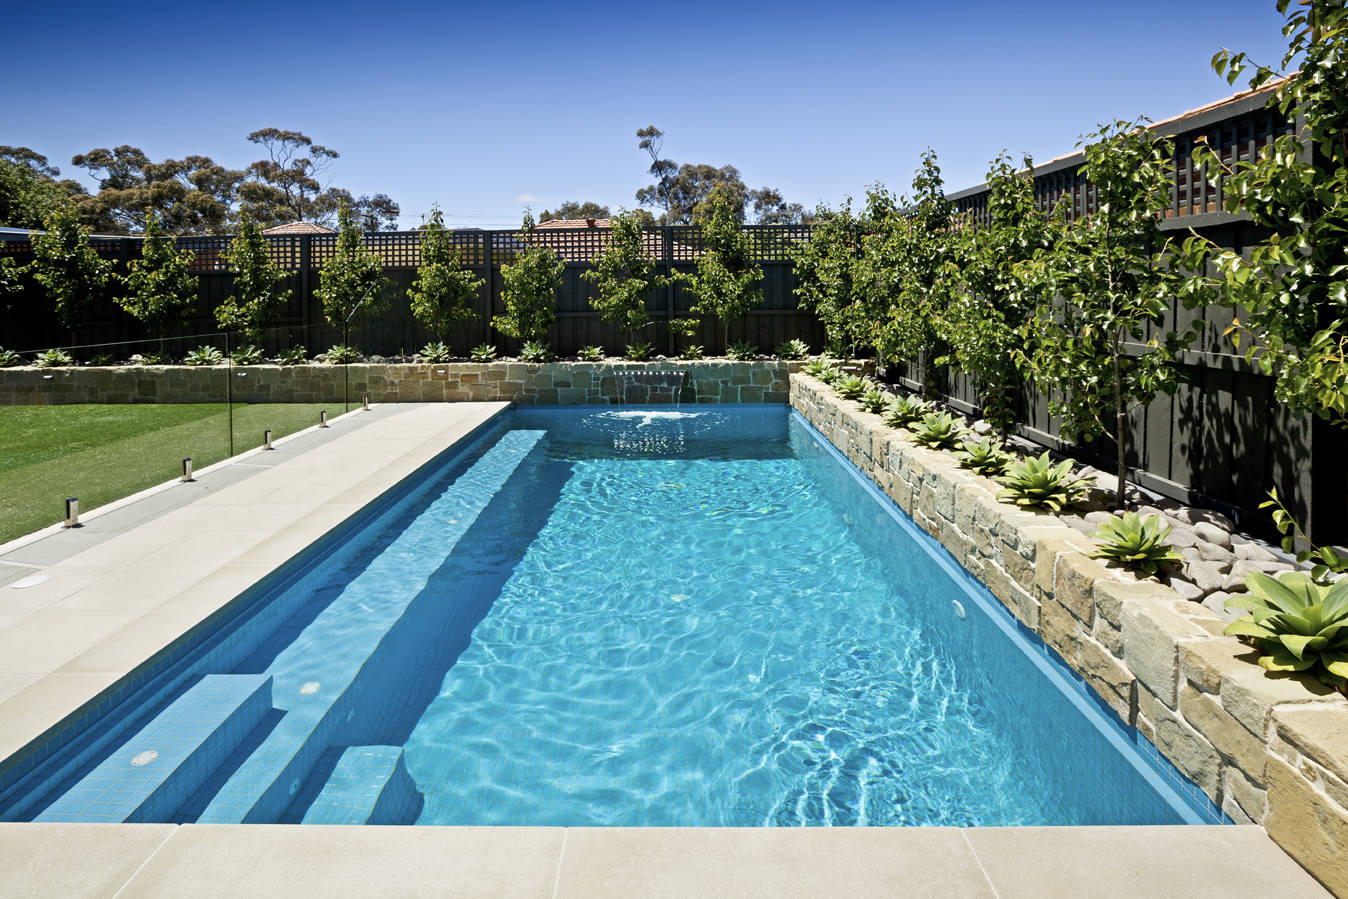 Landscaped pool